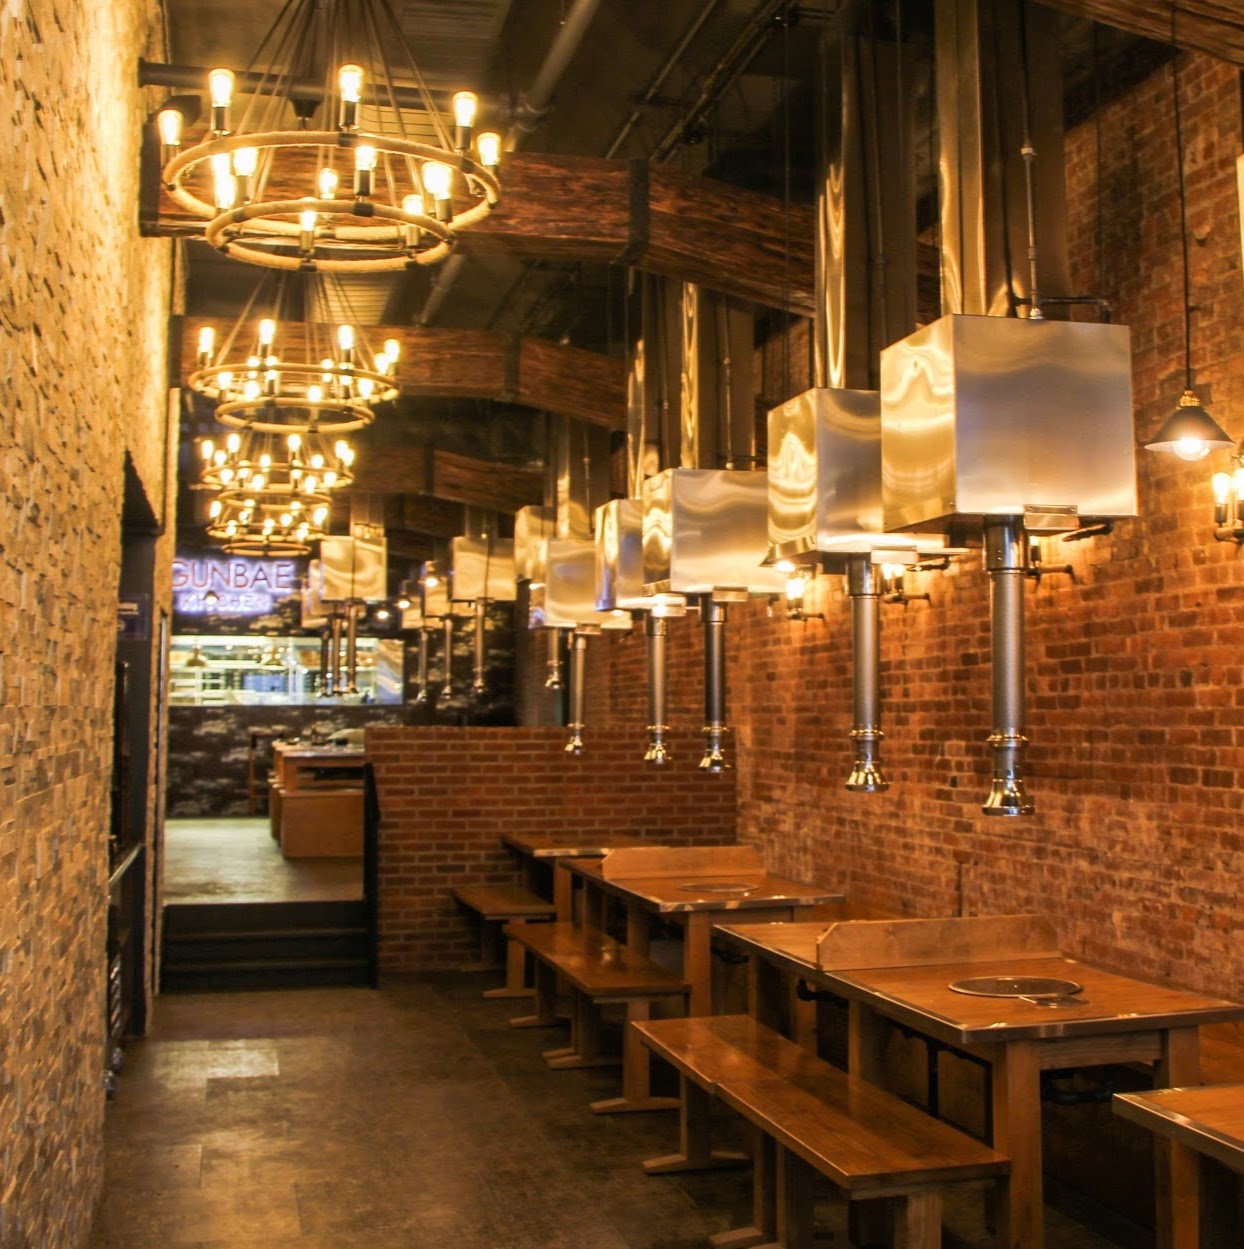 Photo of Gunbae Tribeca in New York City, New York, United States - 1 Picture of Restaurant, Food, Point of interest, Establishment